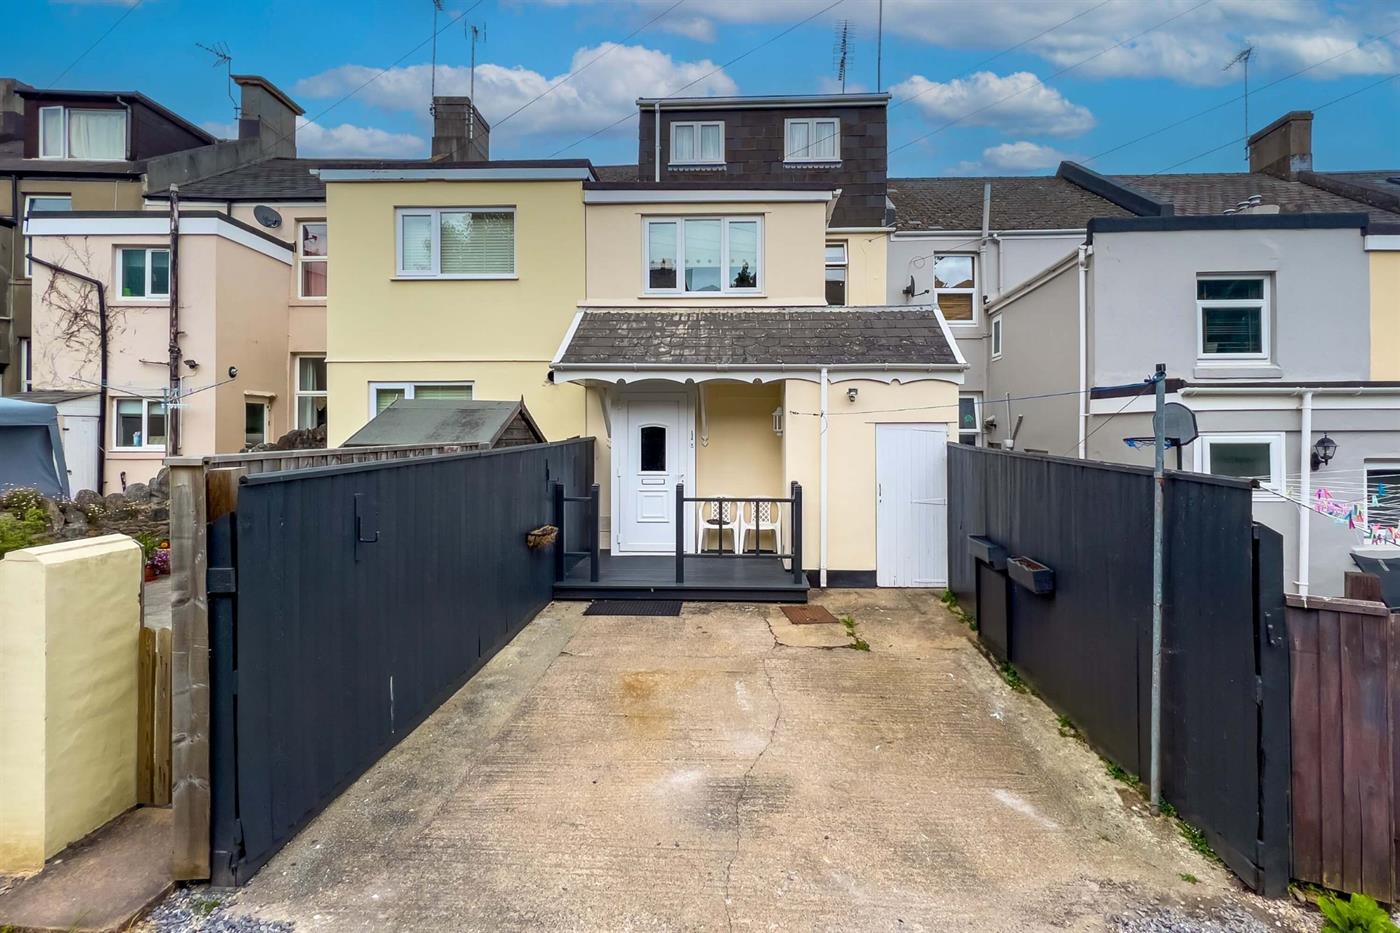 3 Bedroom Apartment to Rent (Let): Babbacombe Road, Torquay, TQ1 3SX